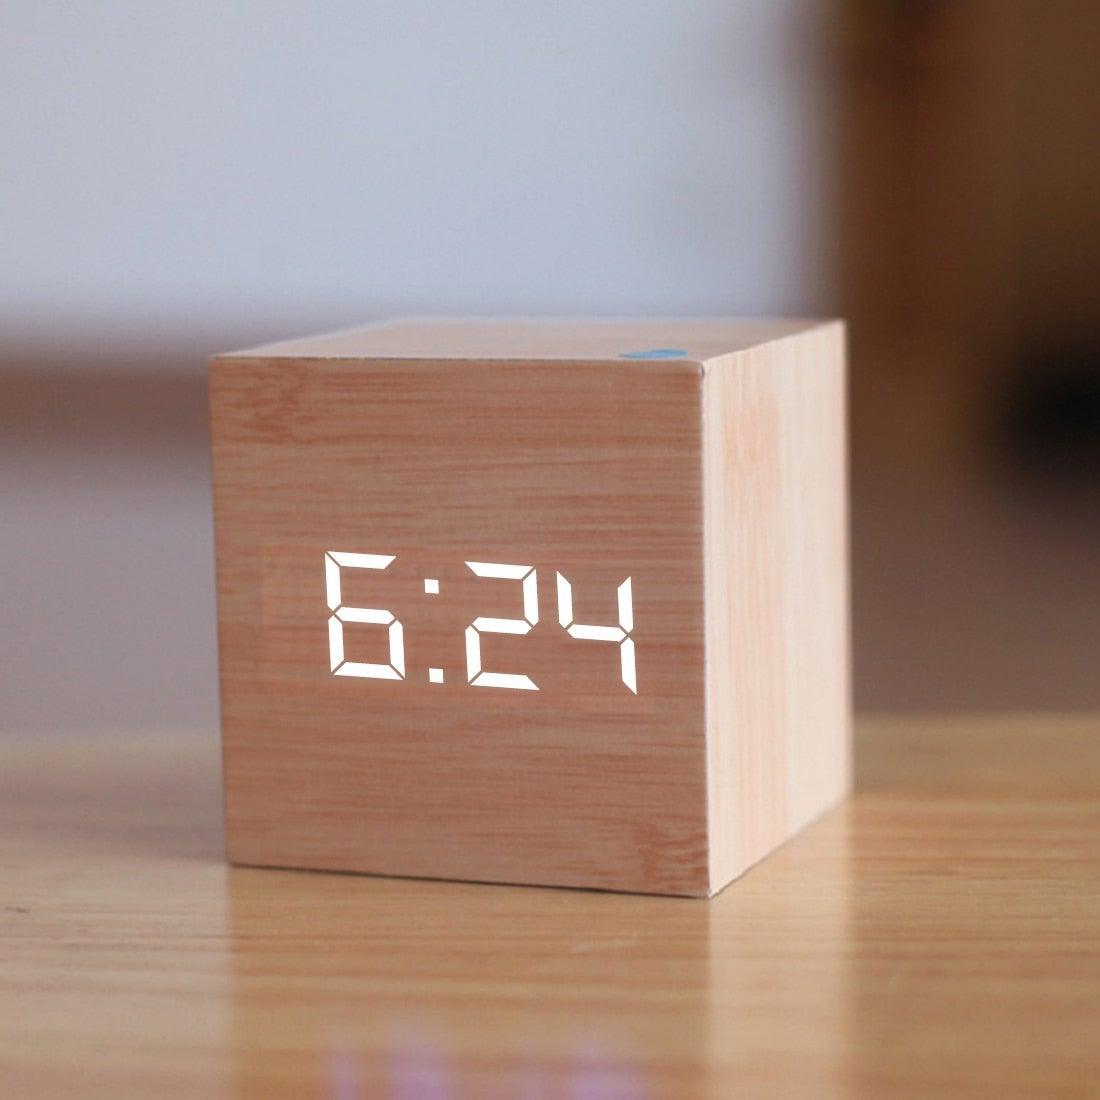  Modern Digital Wood Clock sold by Fleurlovin, Free Shipping Worldwide